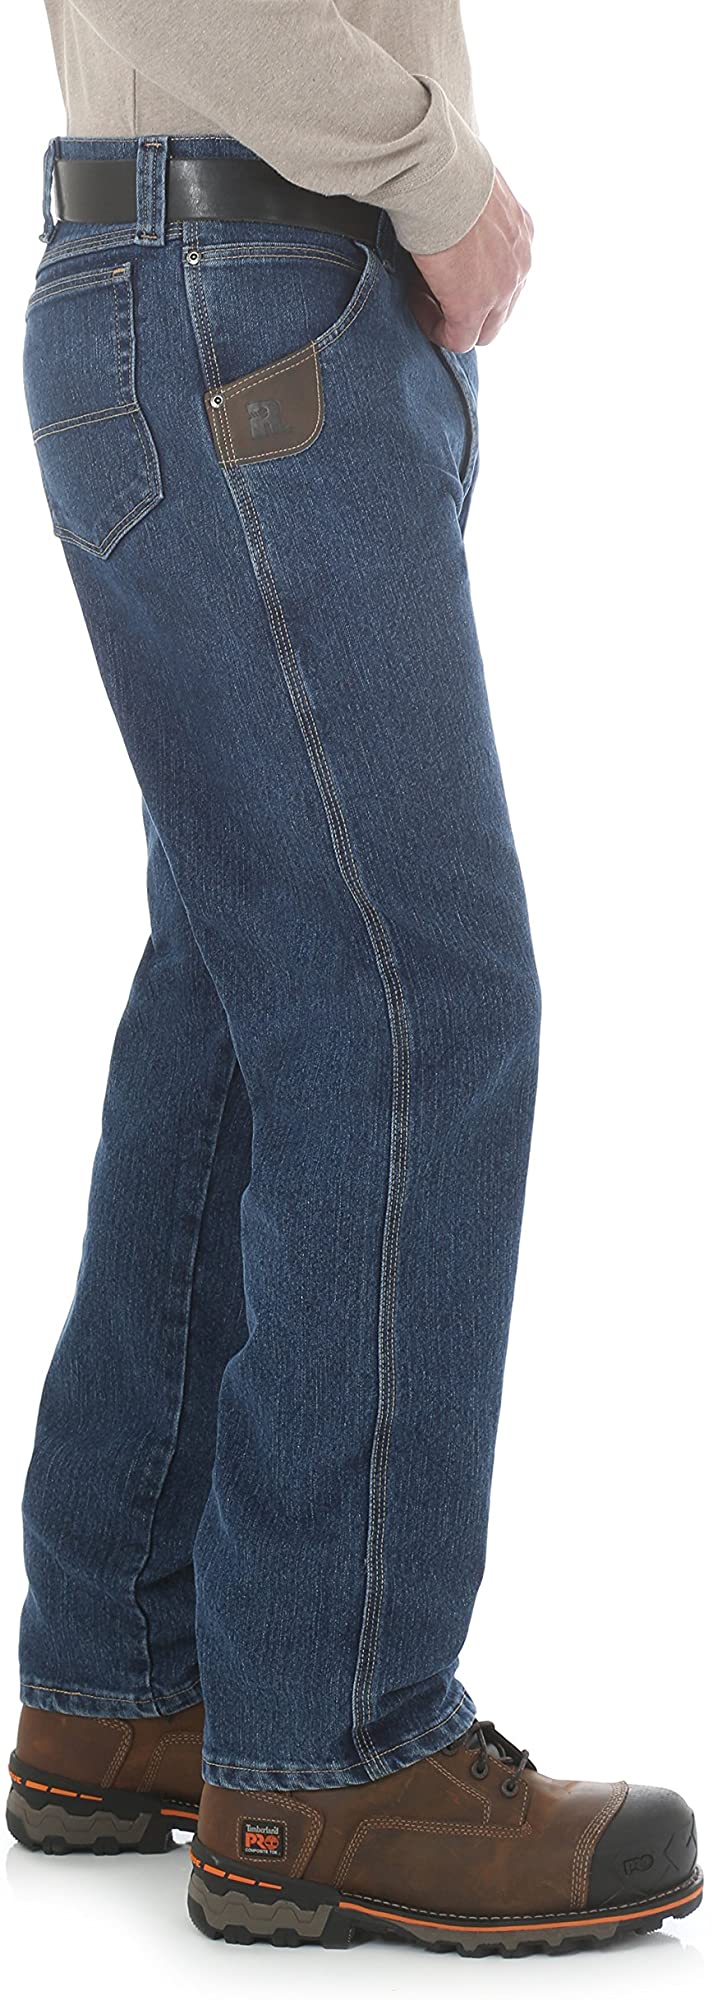 Wrangler Riggs Workwear Men's Advanced Comfort Five Pocket Jean, mid stone, 42x30